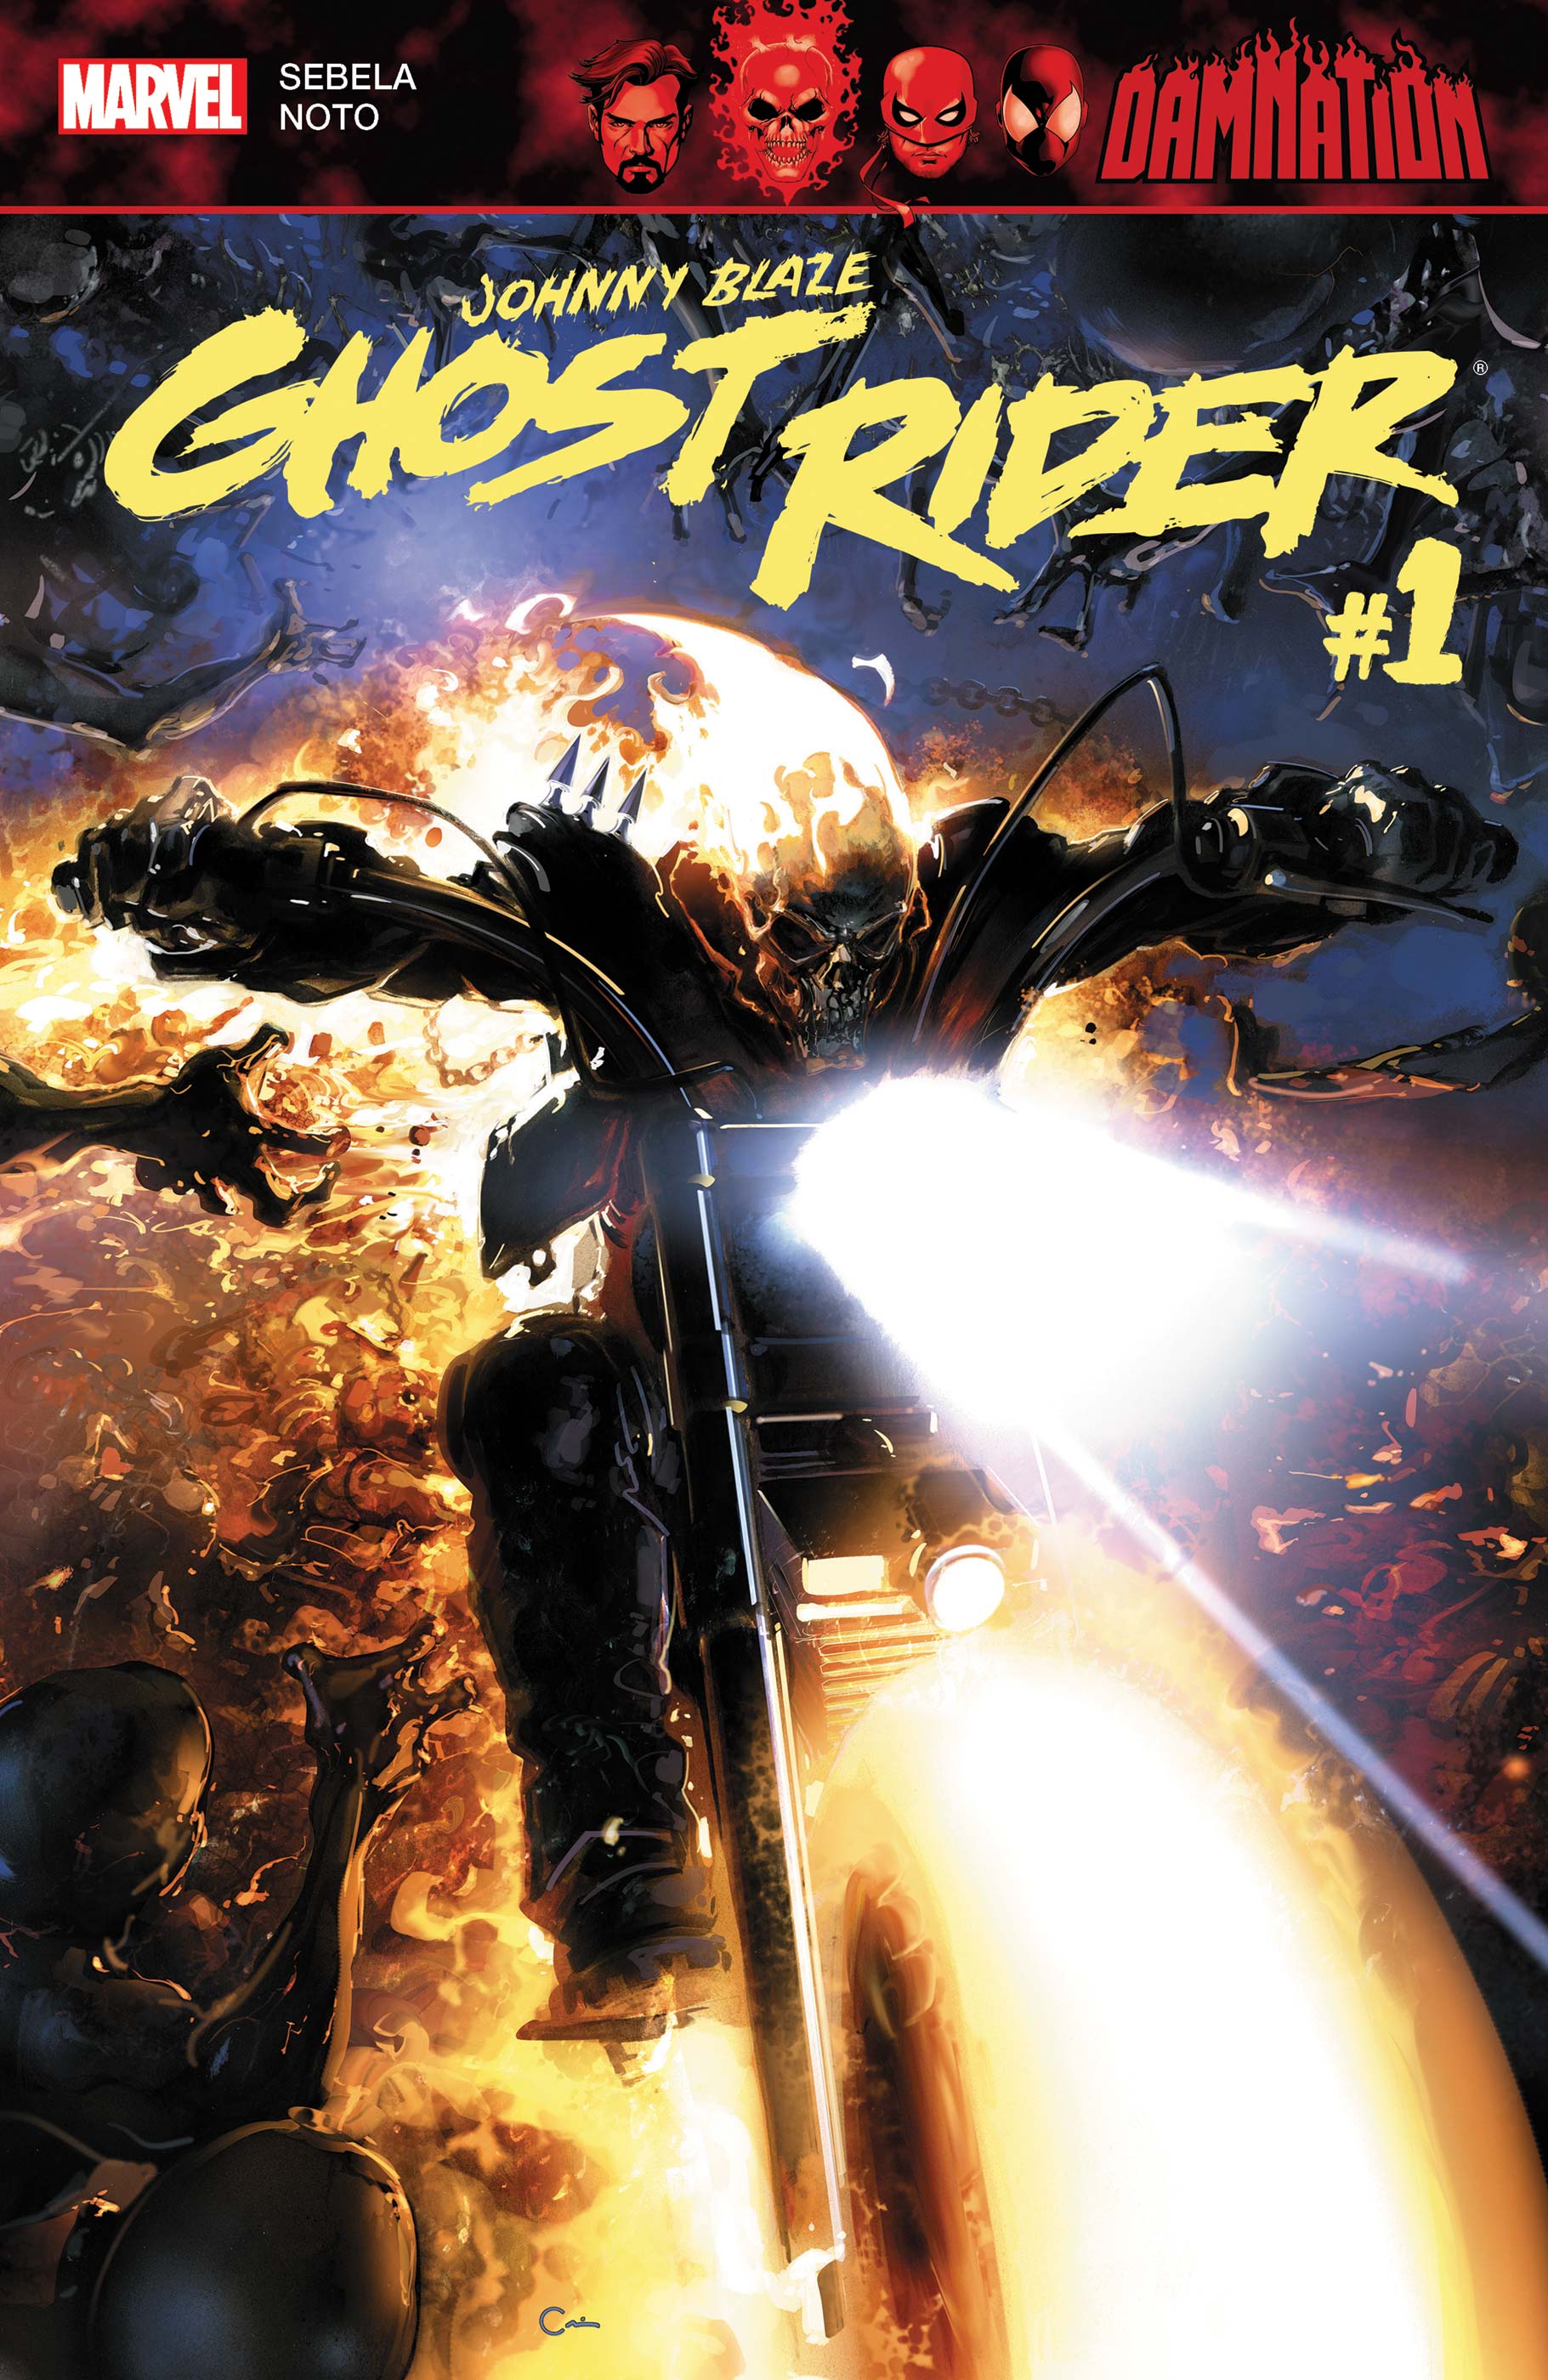 Damnation: Johnny Blaze - Ghost Rider (2018) #1